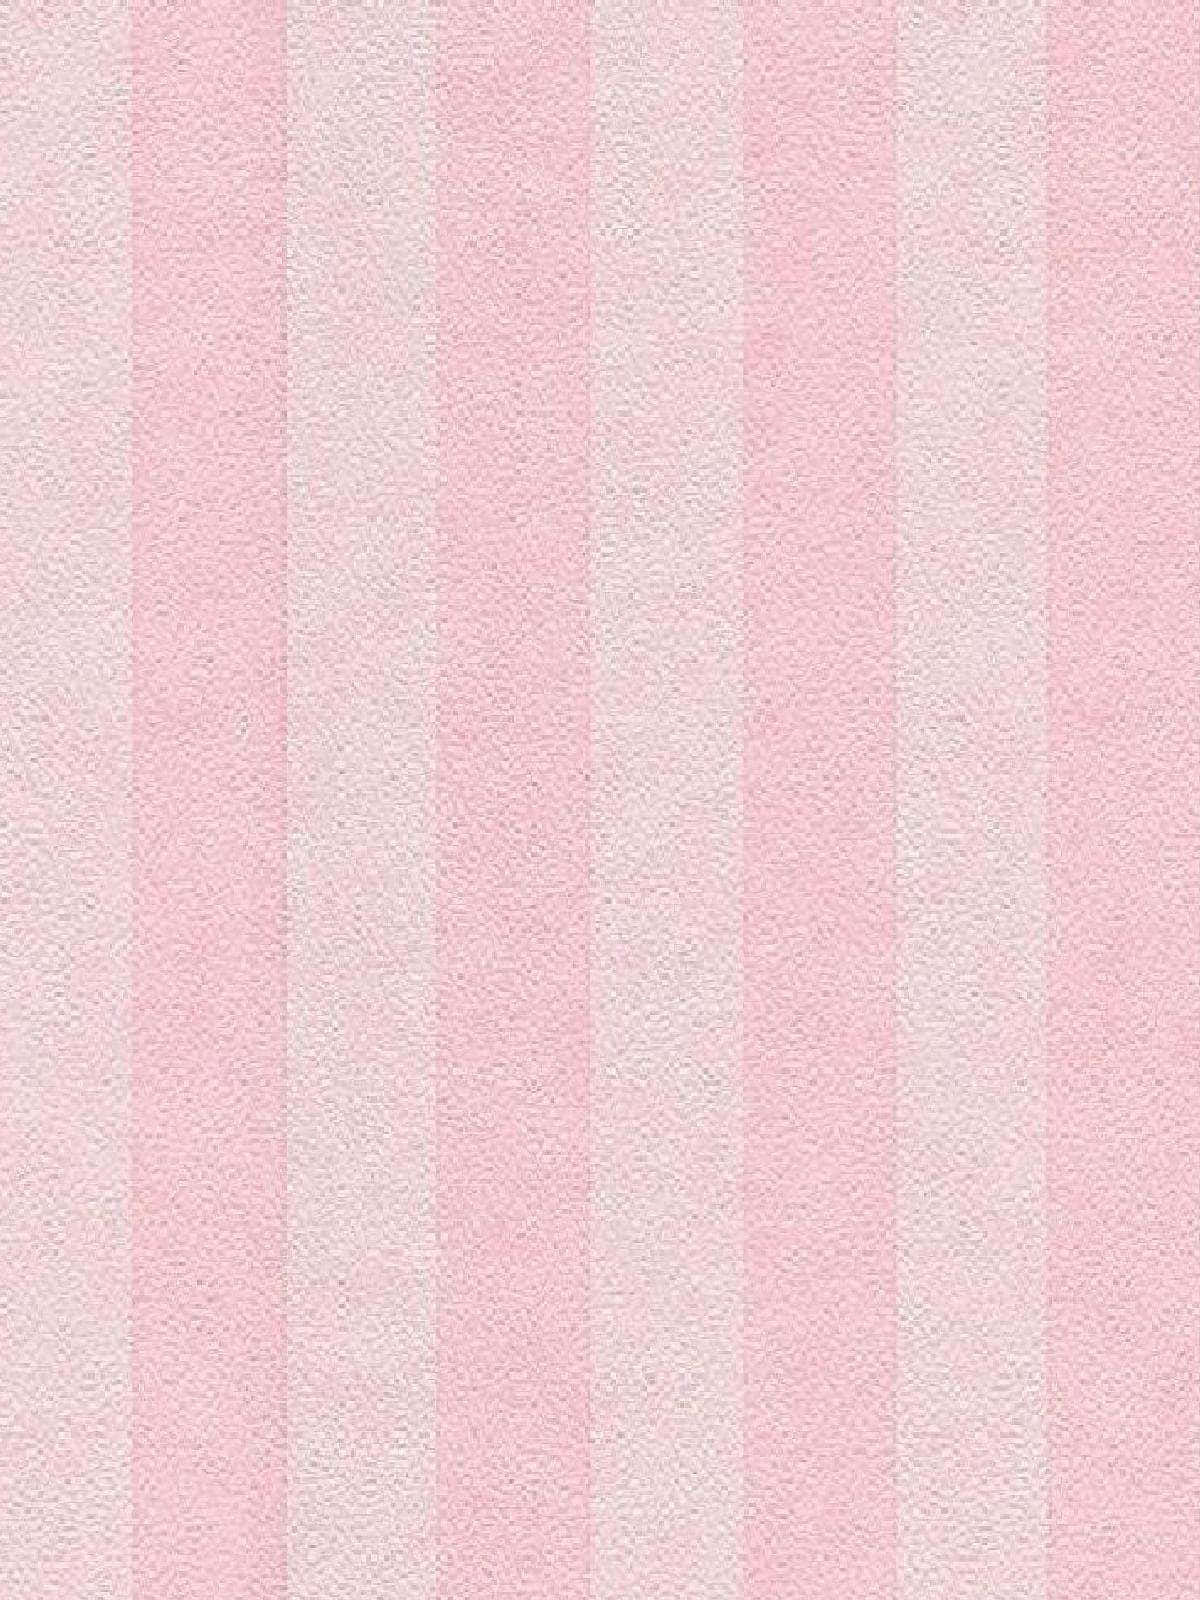 Rayassuaves En Color Rosa Fondo de pantalla